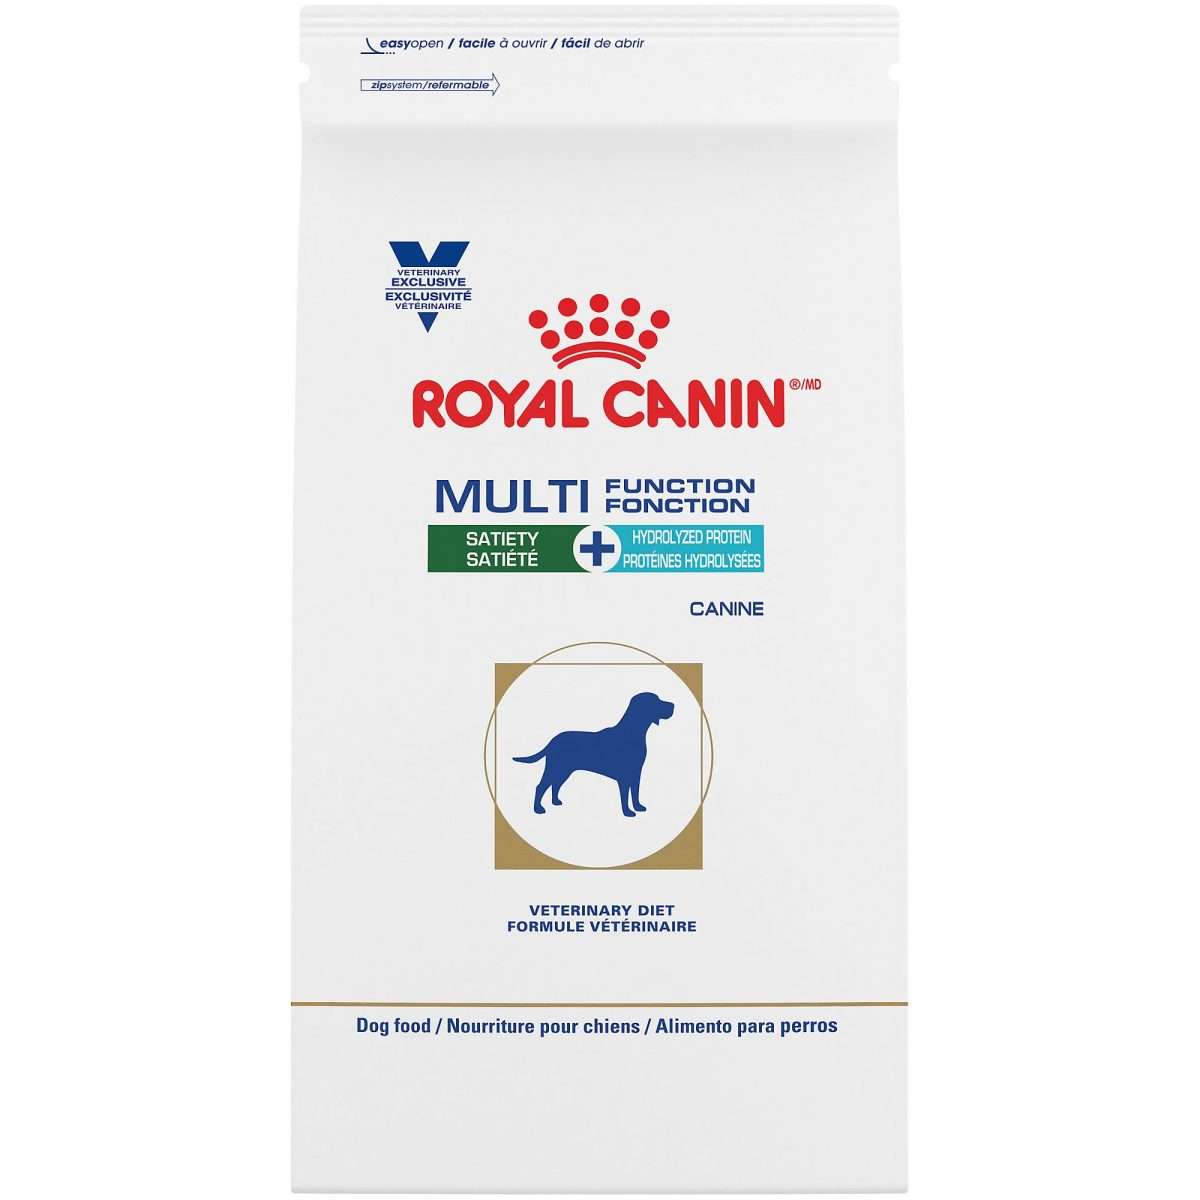 Hills Urinary Cat Food Vs Royal Canin